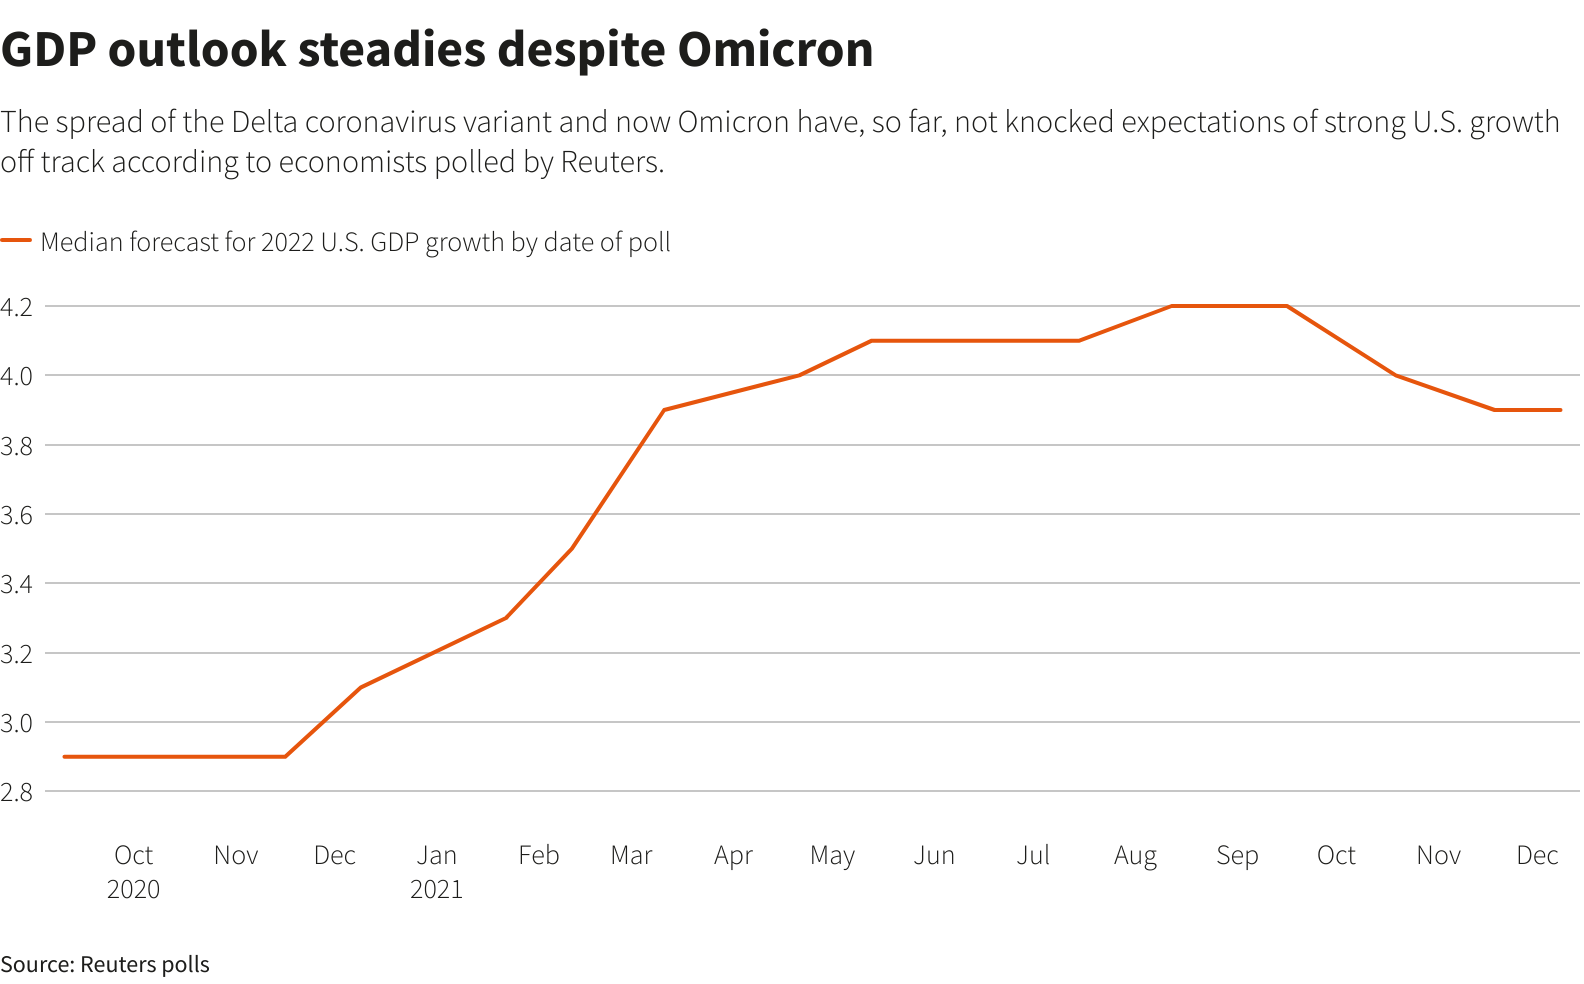 GDP outlook steadies despite Omicron